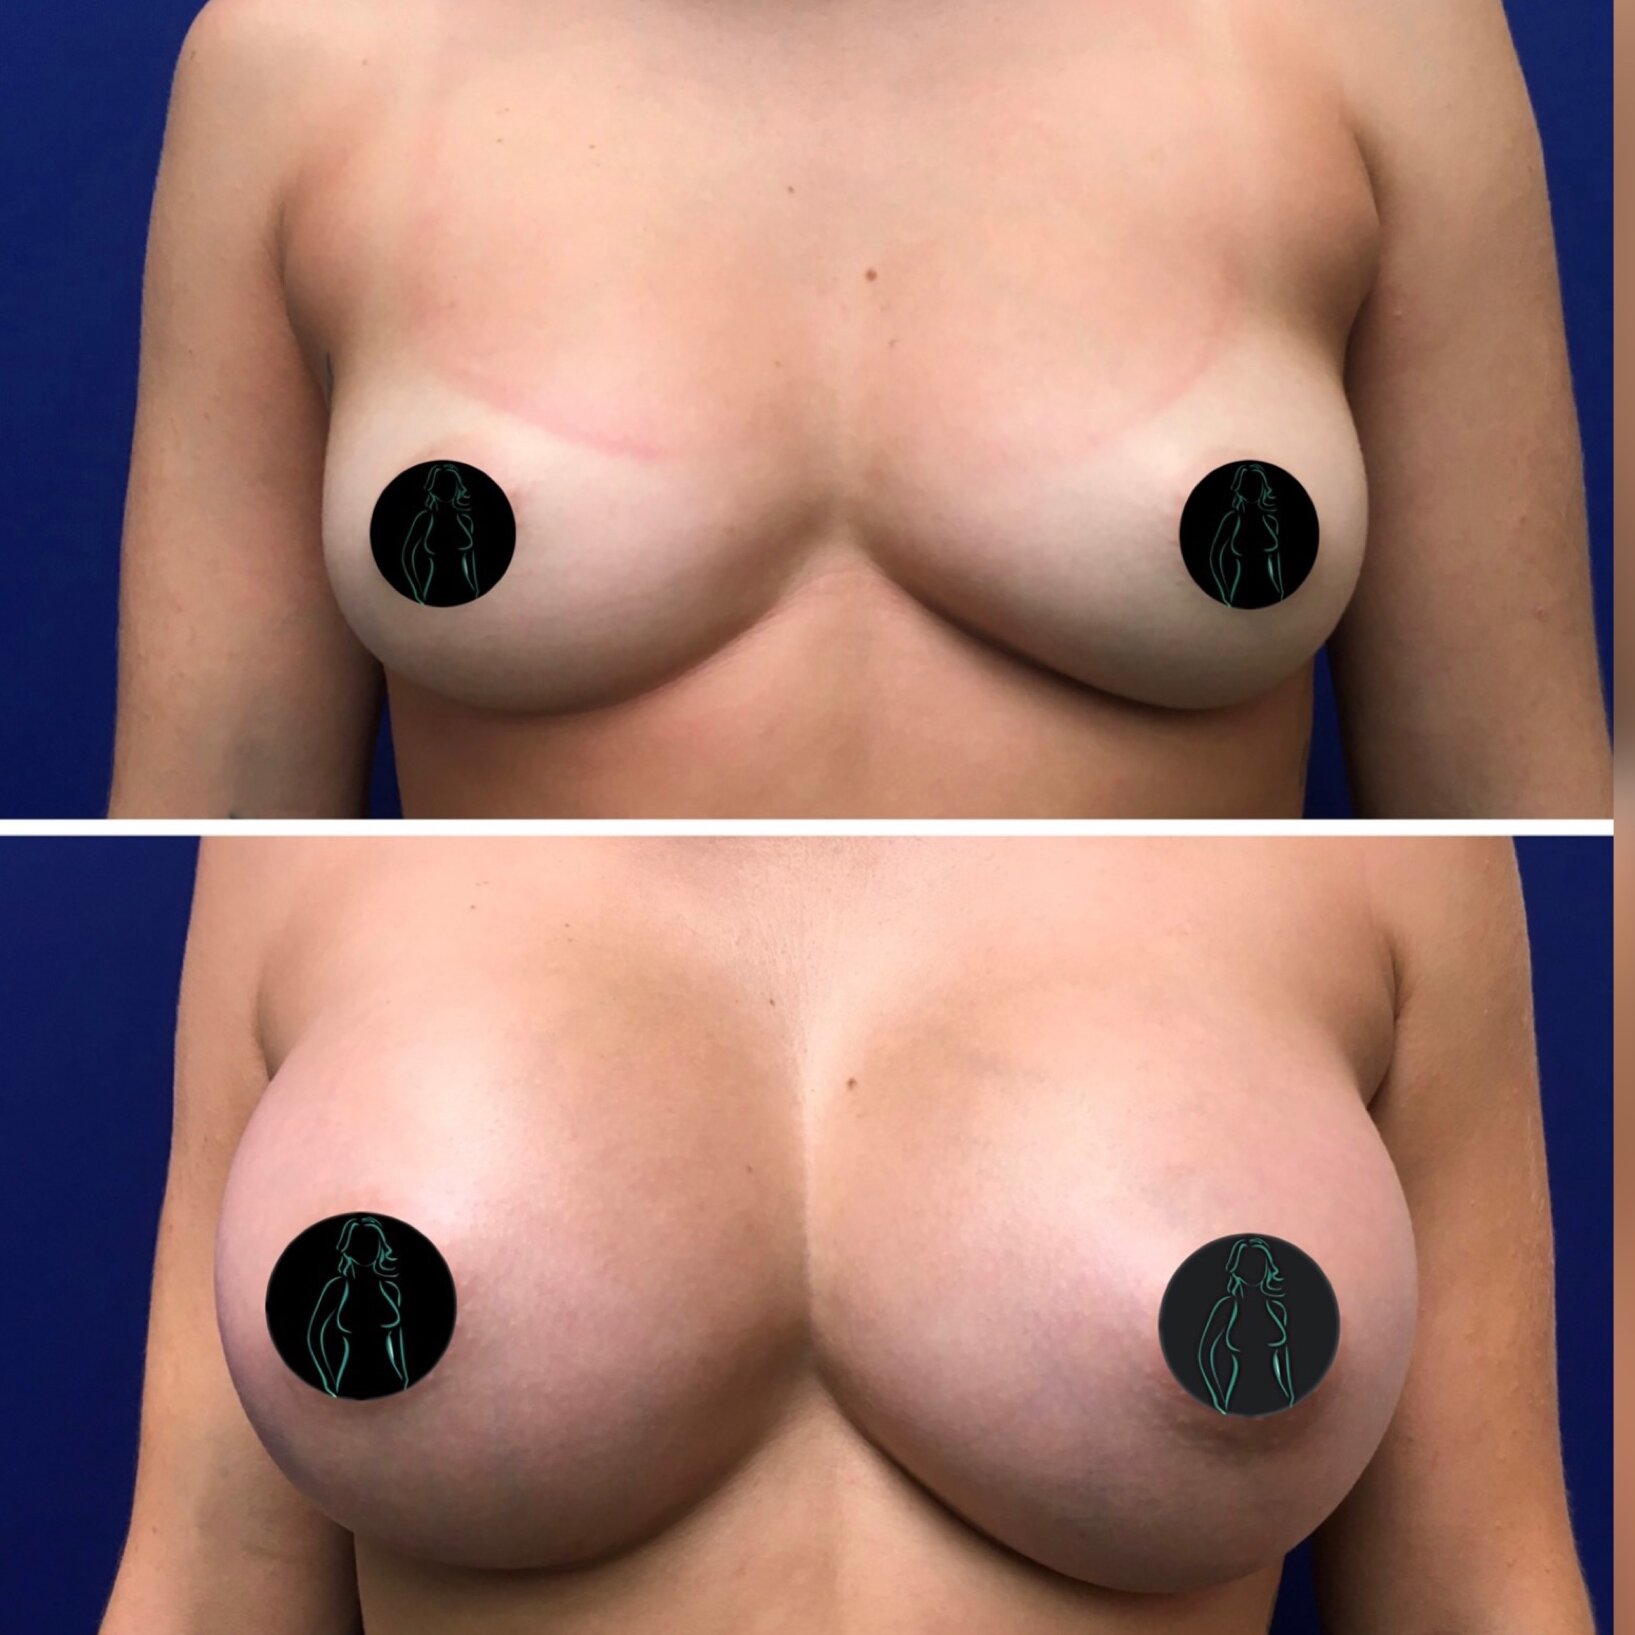 Breast Implant